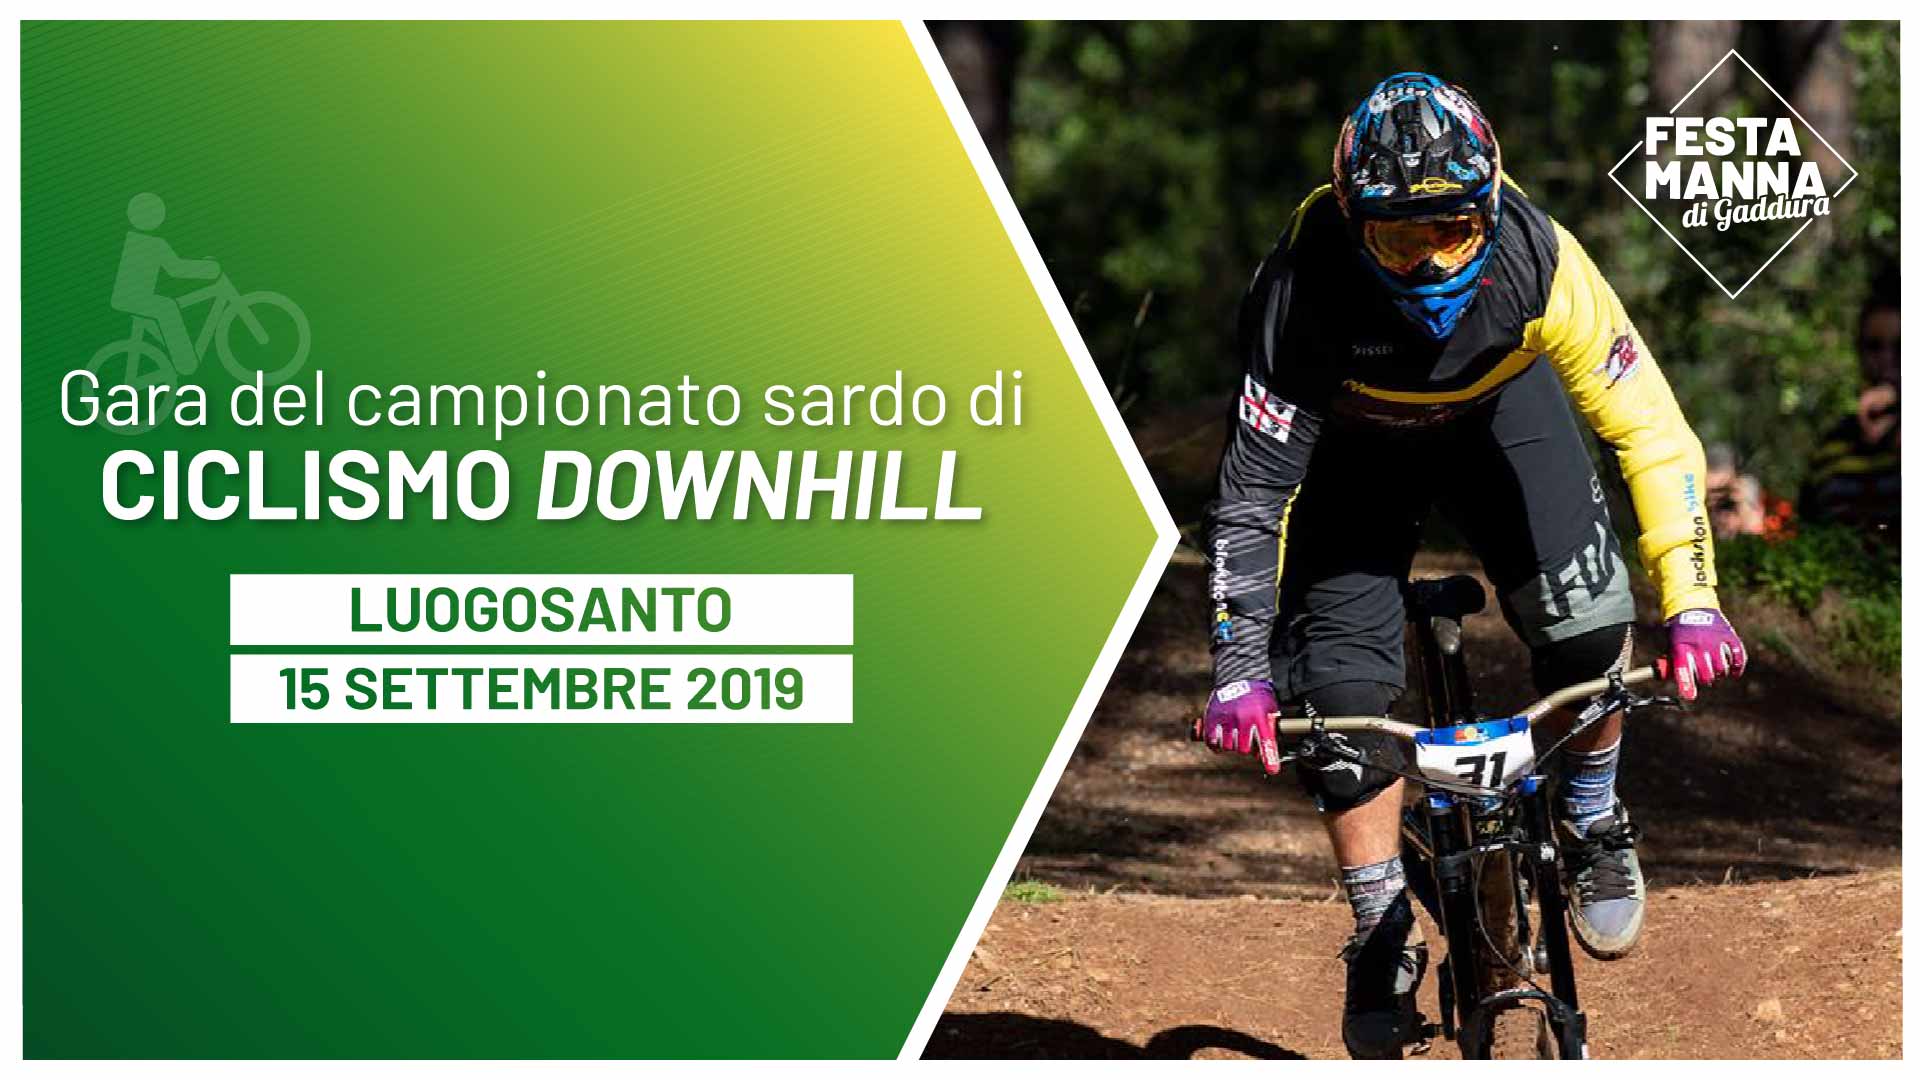 Sardinian downhill cycling championship | Festa Manna di Gaddura 2019